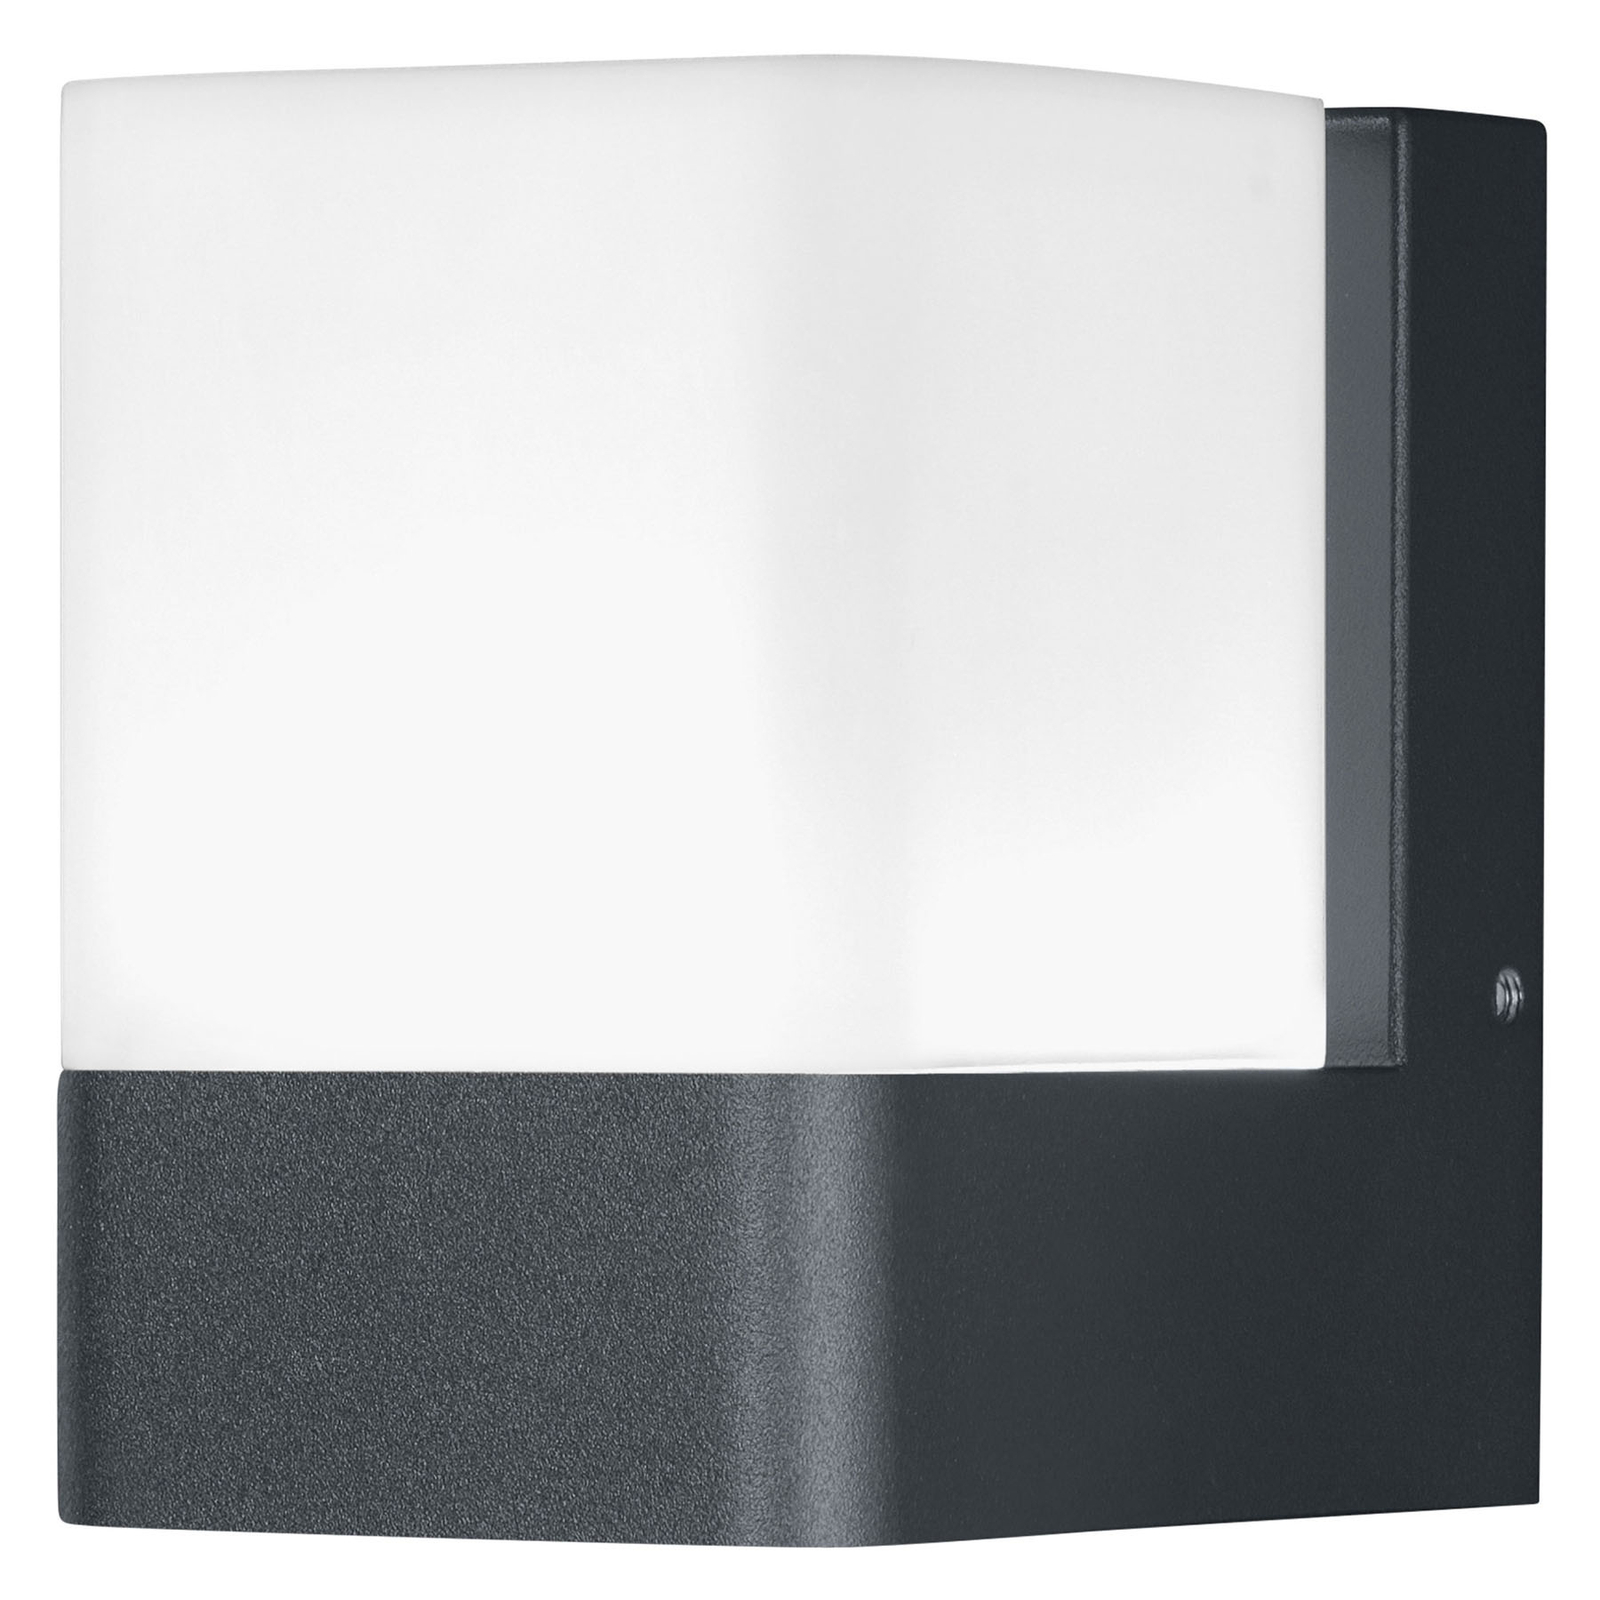 LEDVANCE SMART+ WiFi Cube LED fali lámpa RGBW up